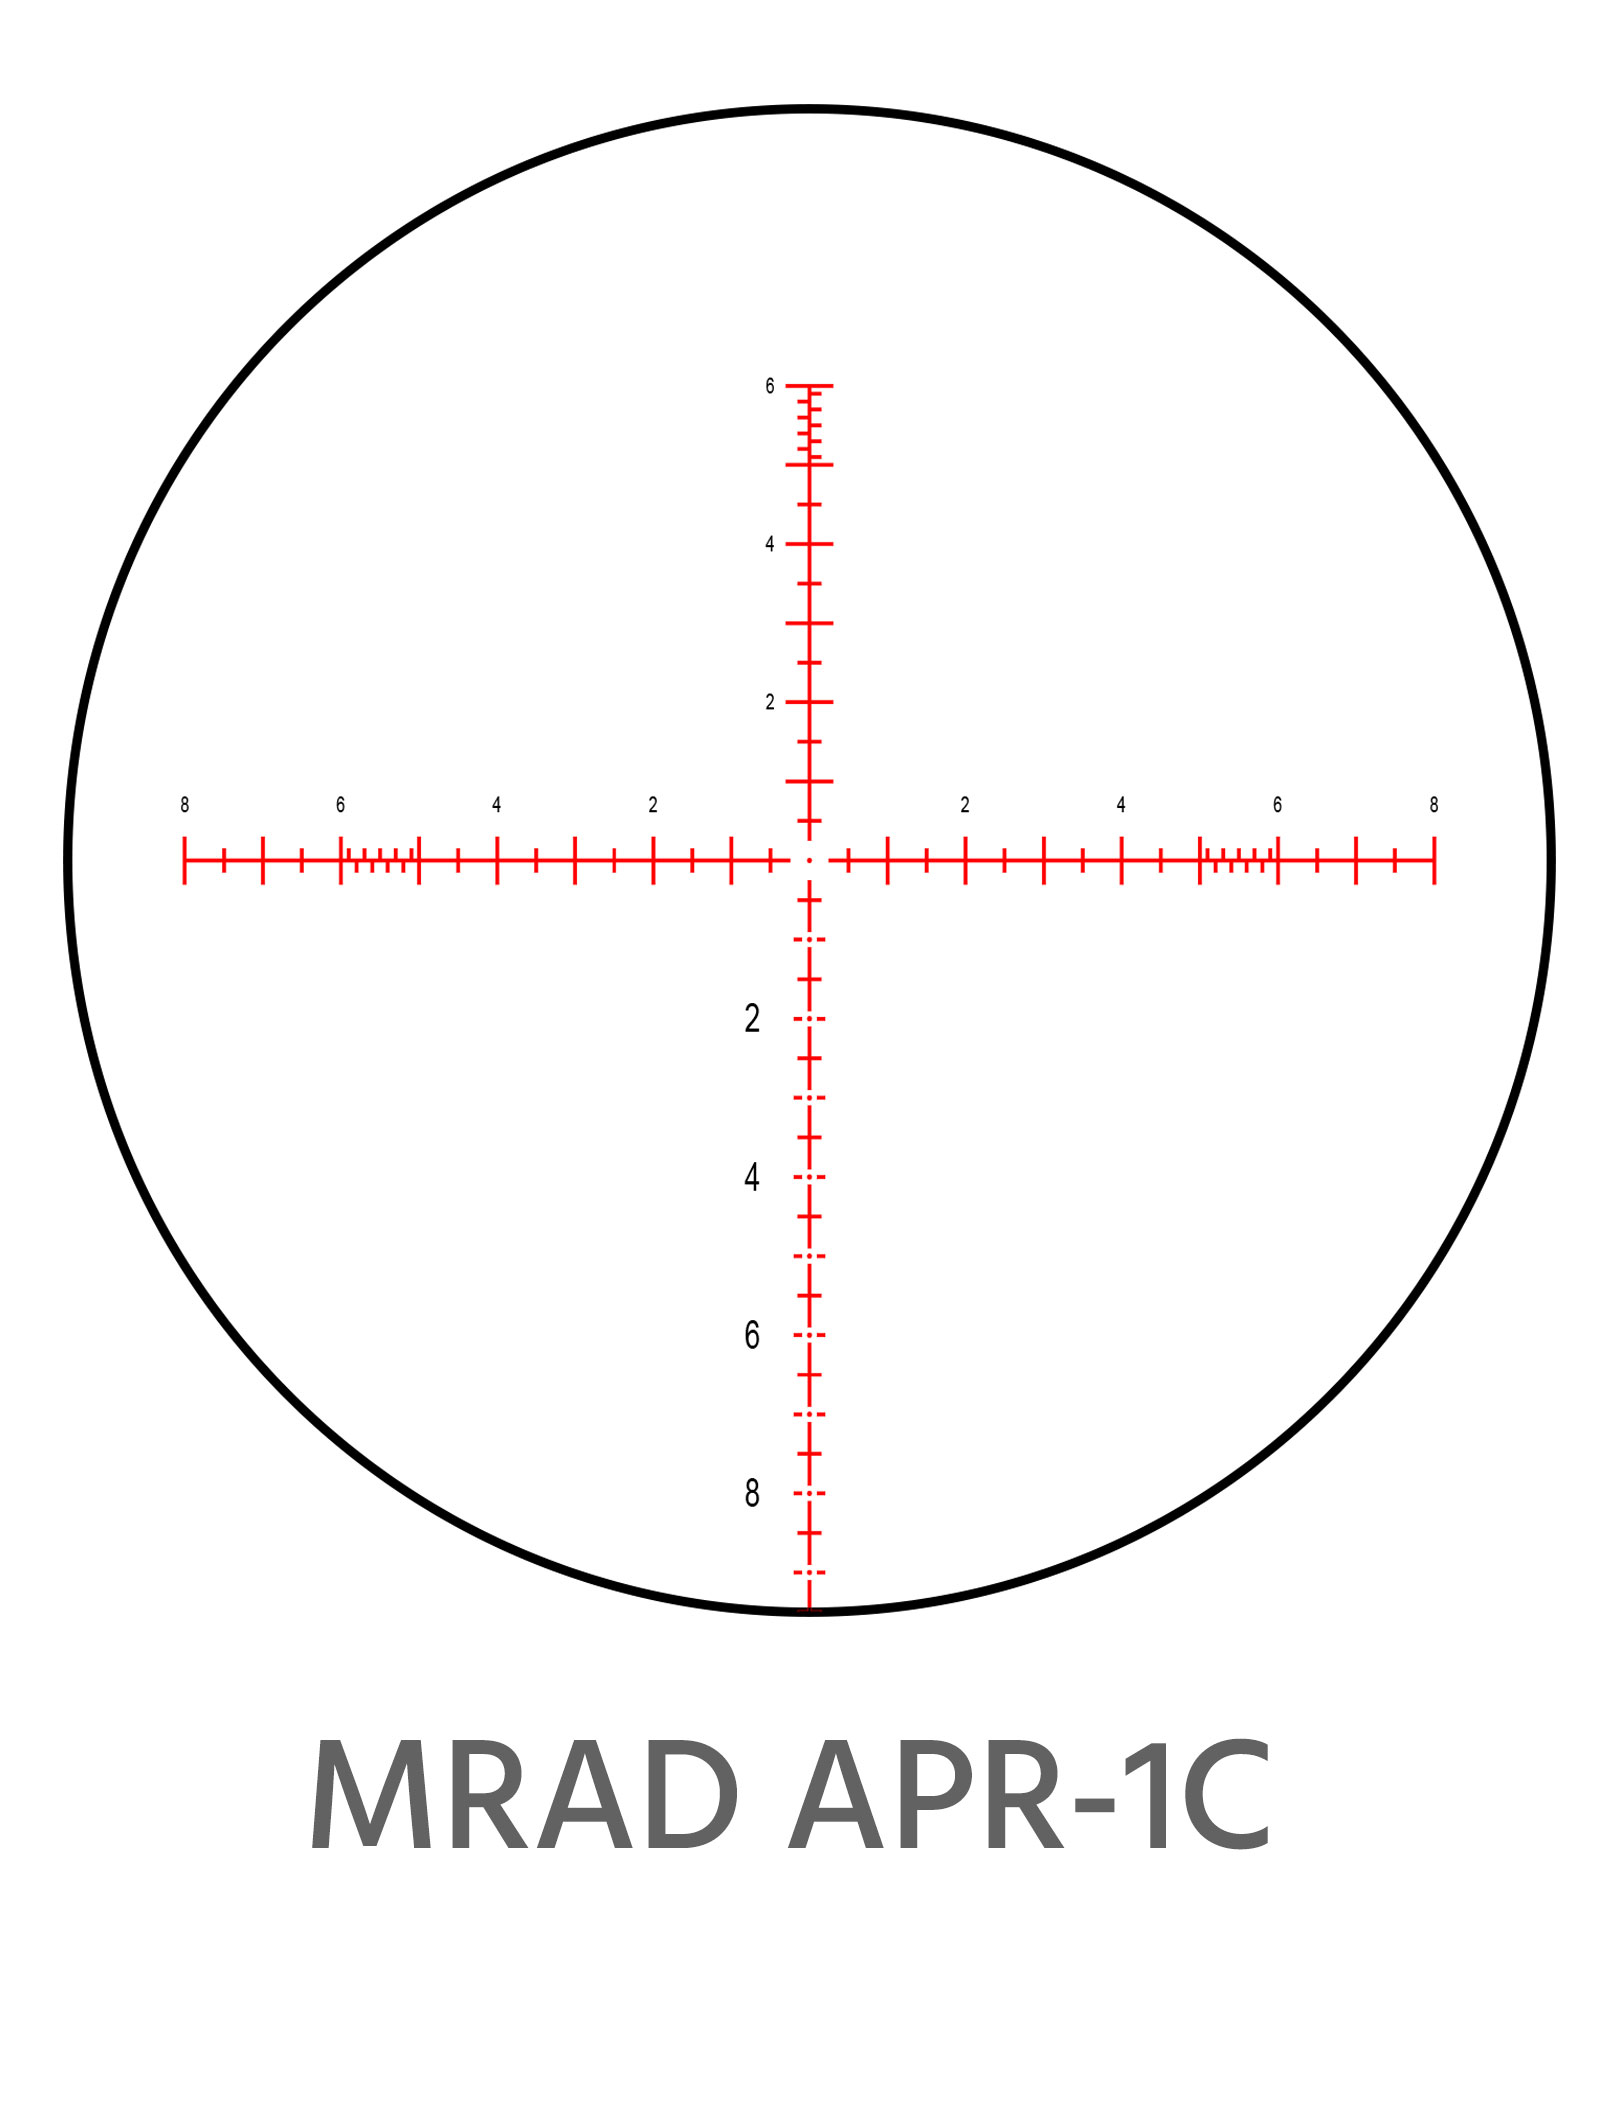 MRAD APR-1C